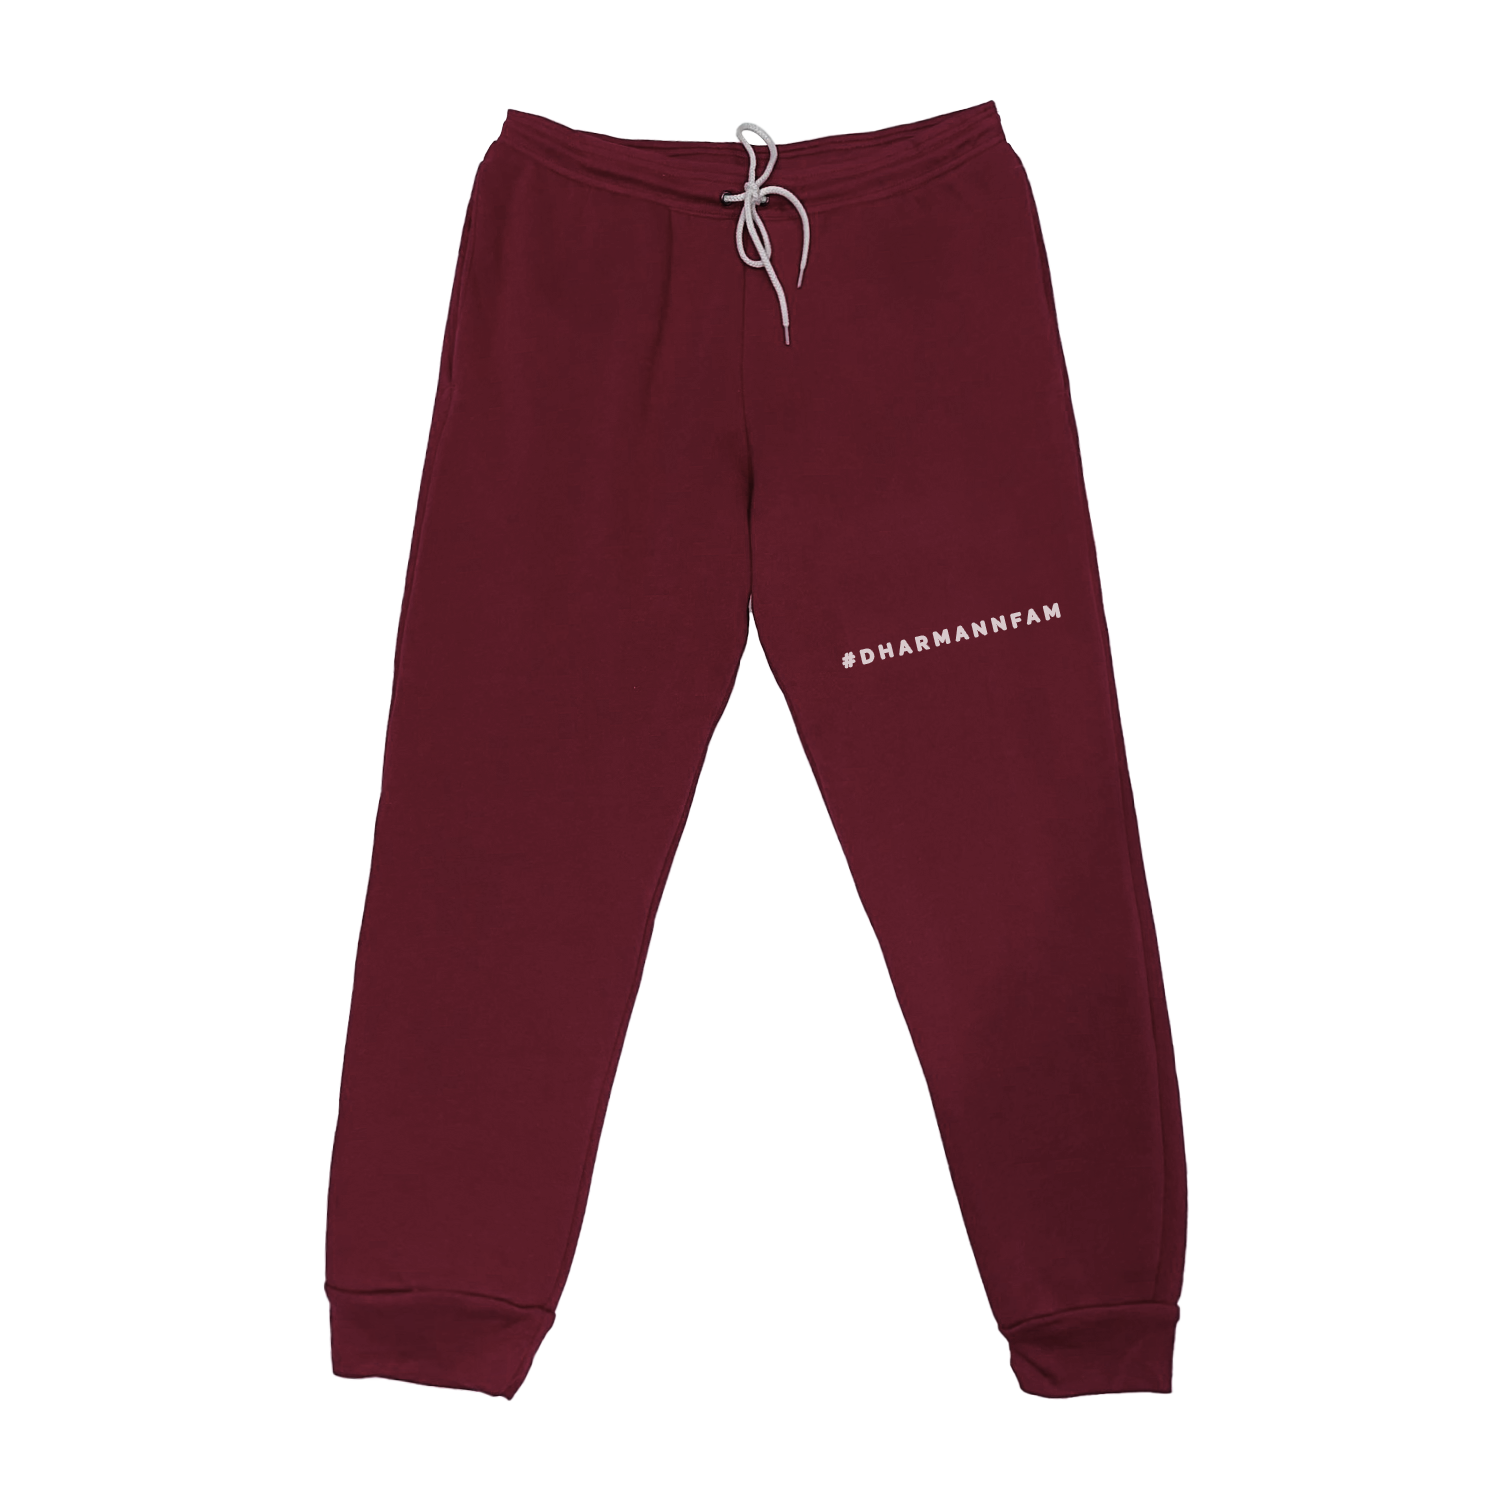 Adidas Originals Adibreak Popper Track Pants In Burgundy-Red for Women